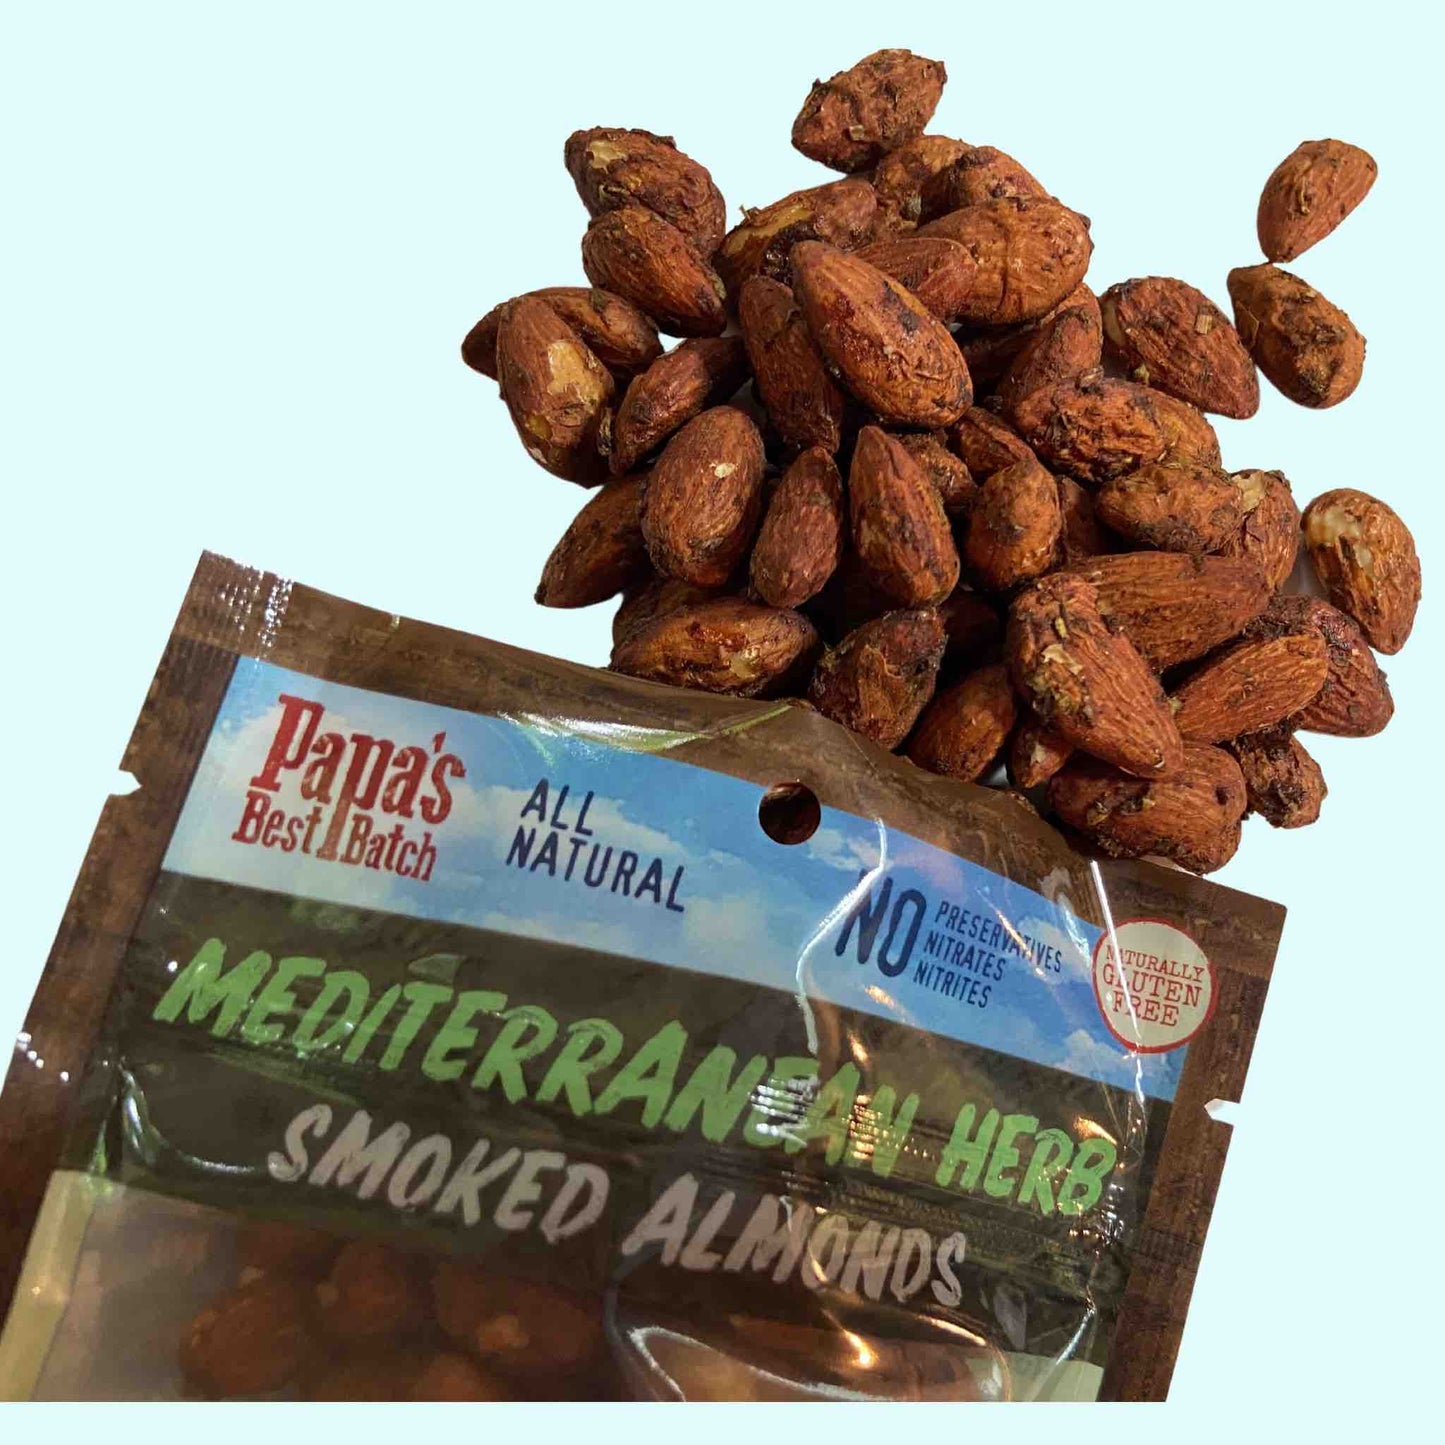 Mediterranean Herb Smoked Almonds